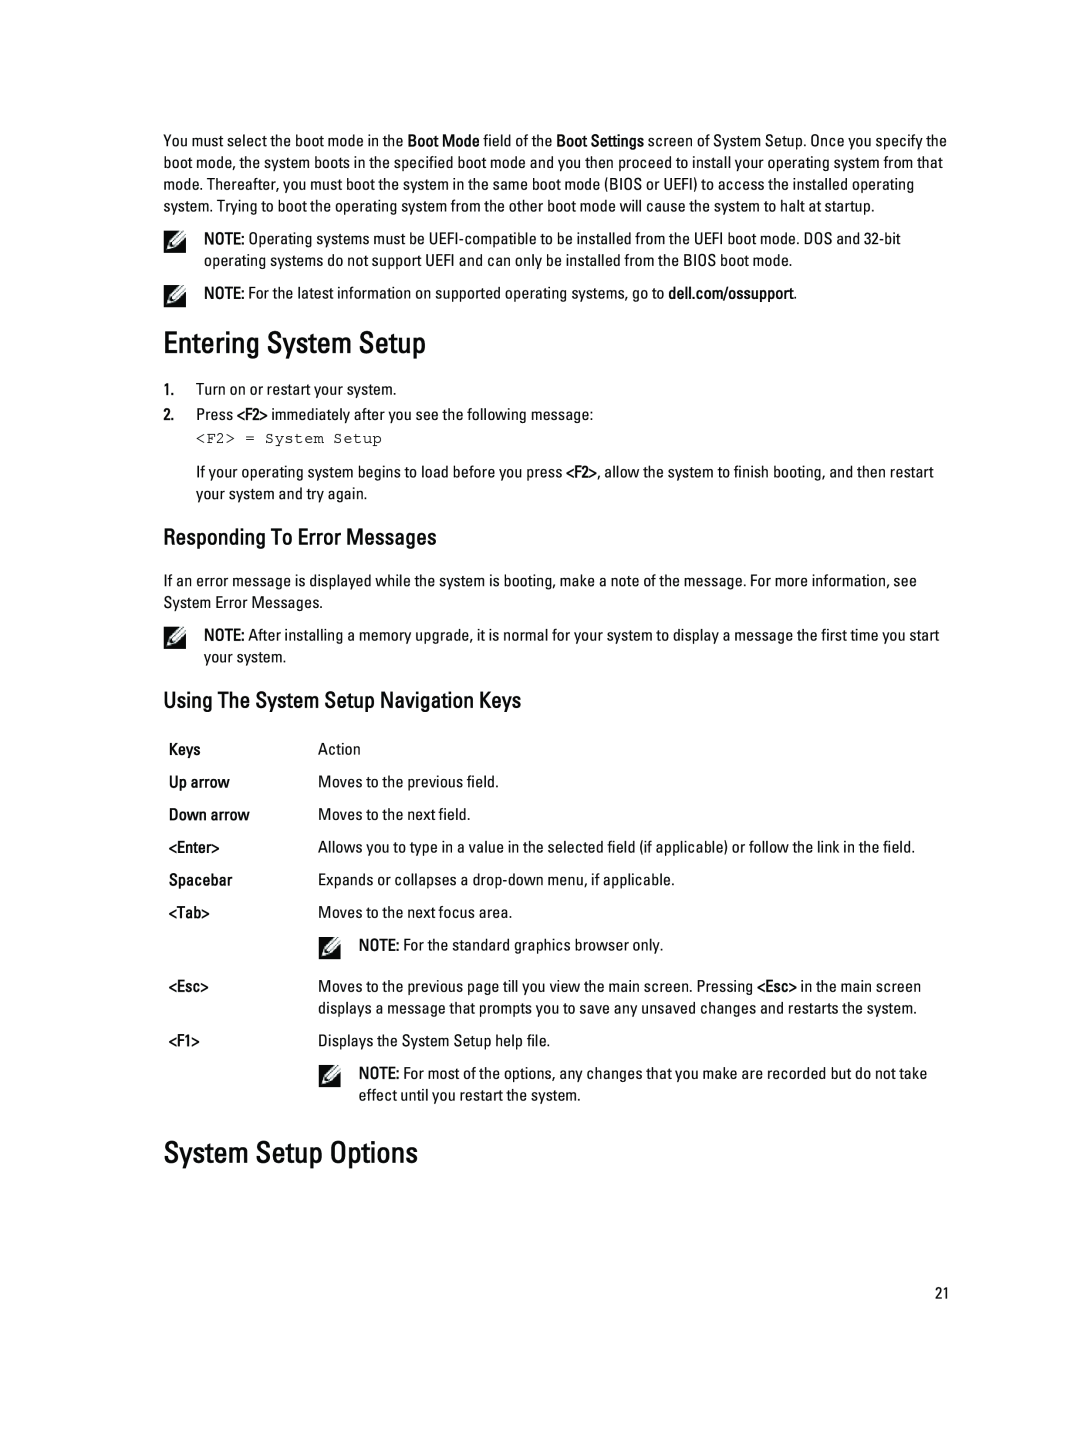 Dell R720XD owner manual Entering System Setup, System Setup Options, Responding To Error Messages 